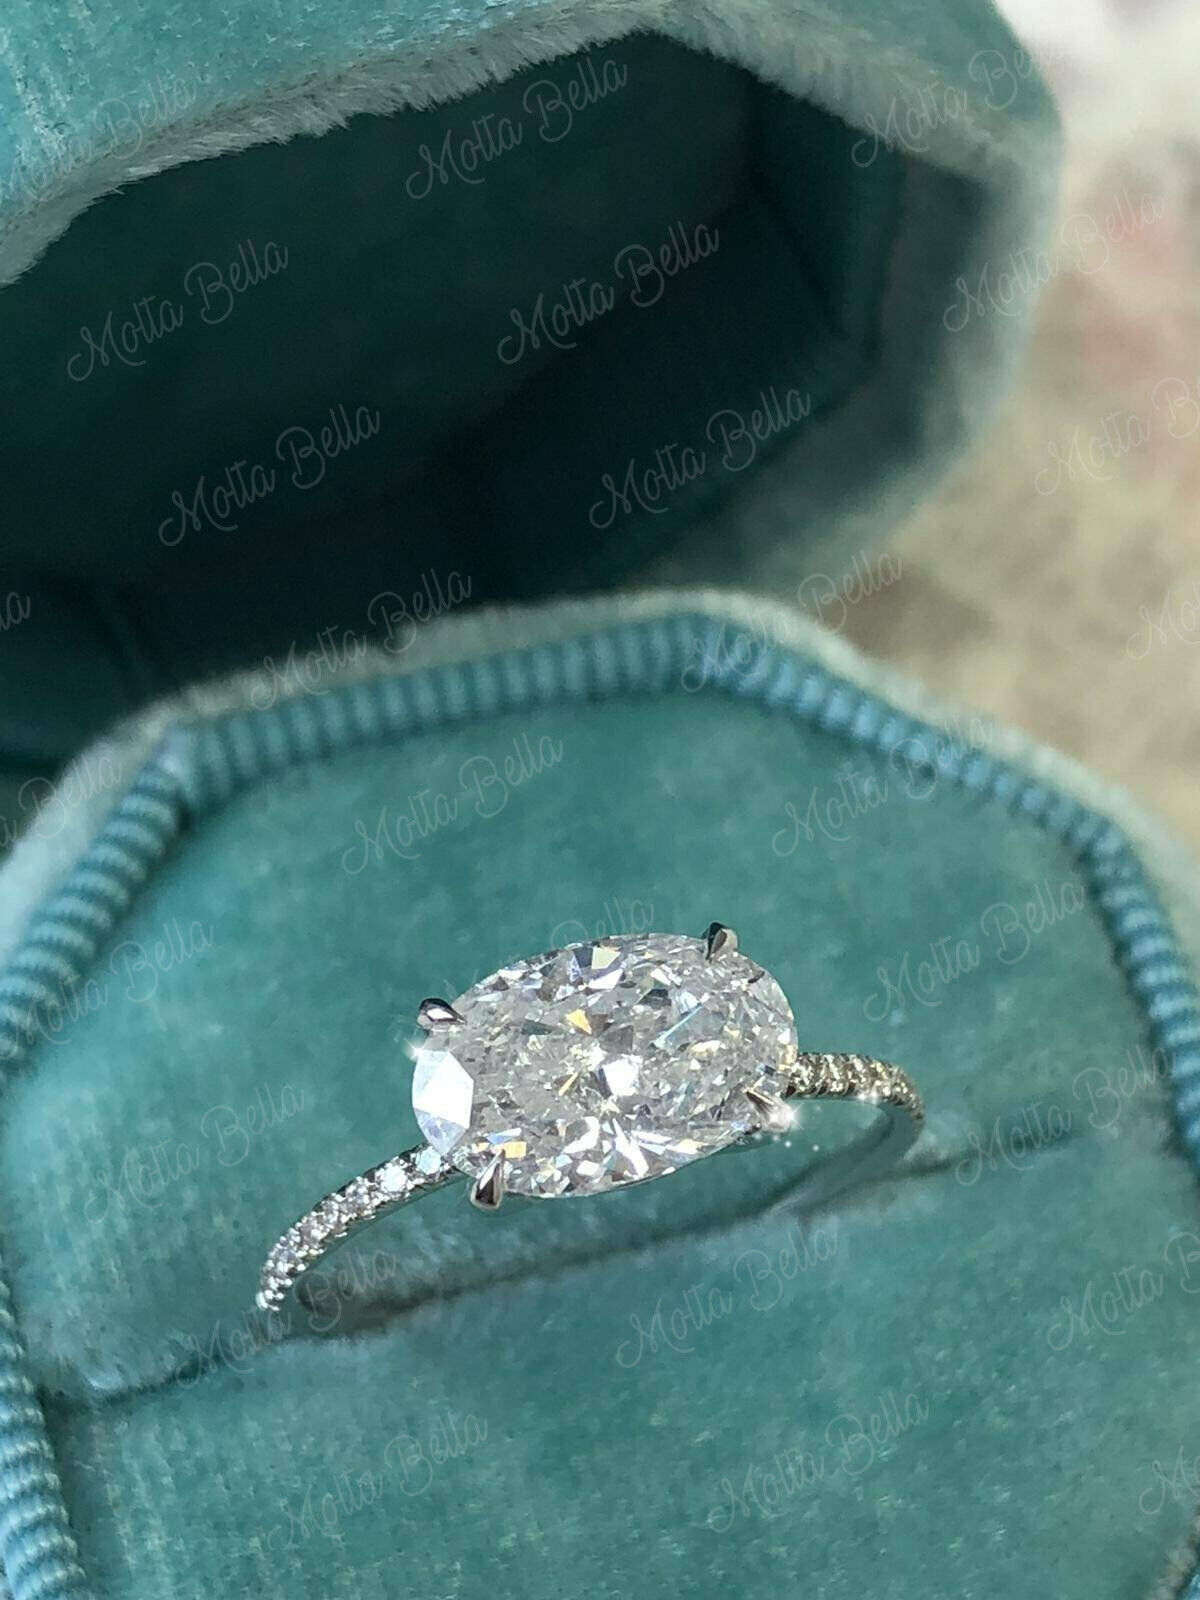 14kWhite Gold Finish 3Ct Oval Cut VVS1 Diamond Solitaire Engagement Wedding Ring Oryginalny produkt krajowy